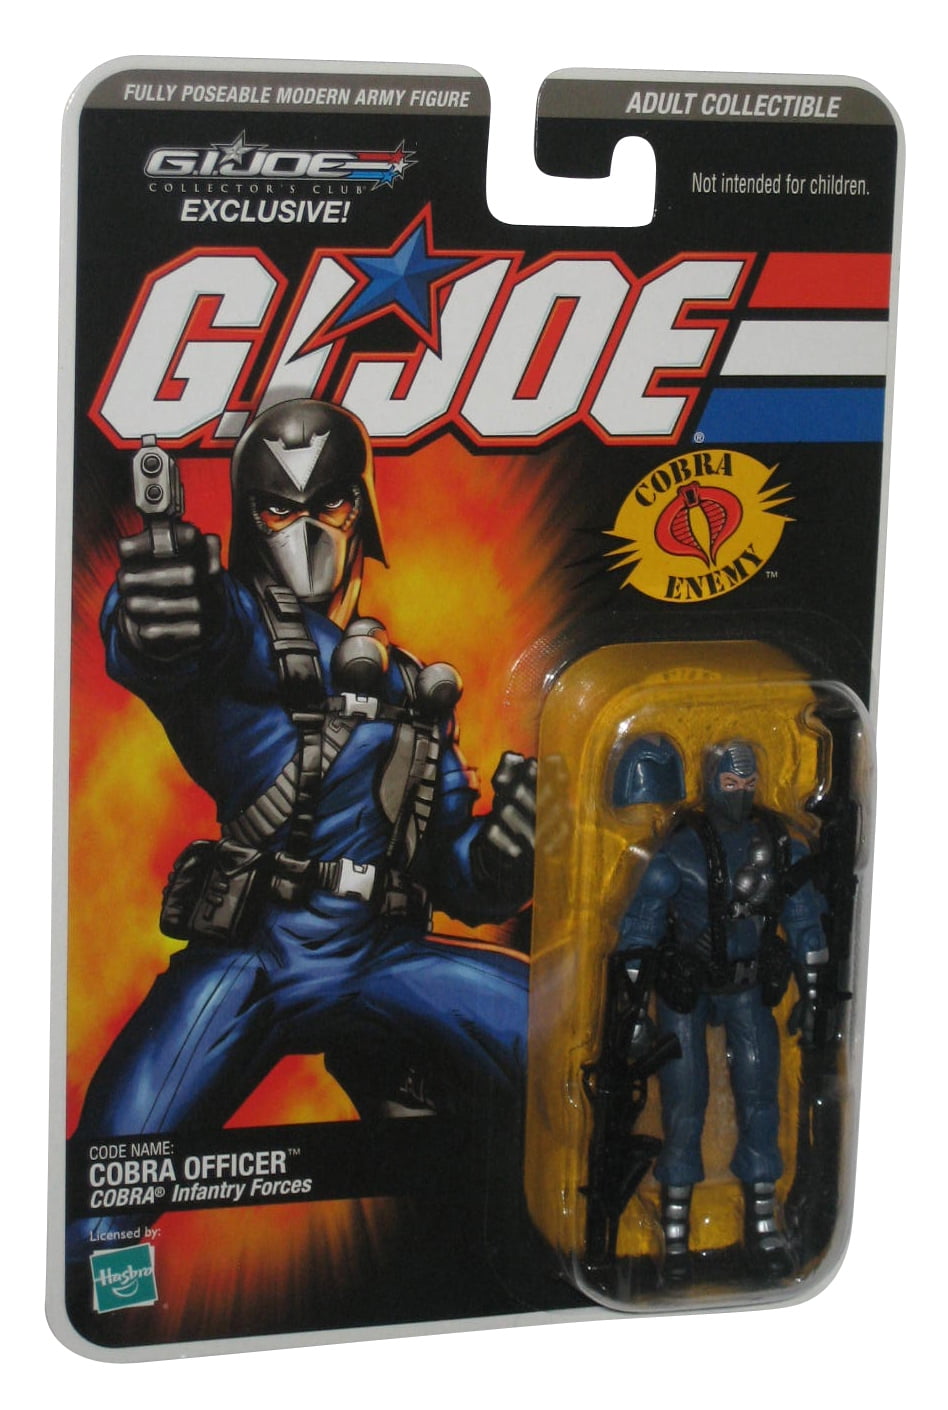 Lot 20 Accessory For GI JOE Cobra G.I JOE 3.75'' Action Figure star wars toy 